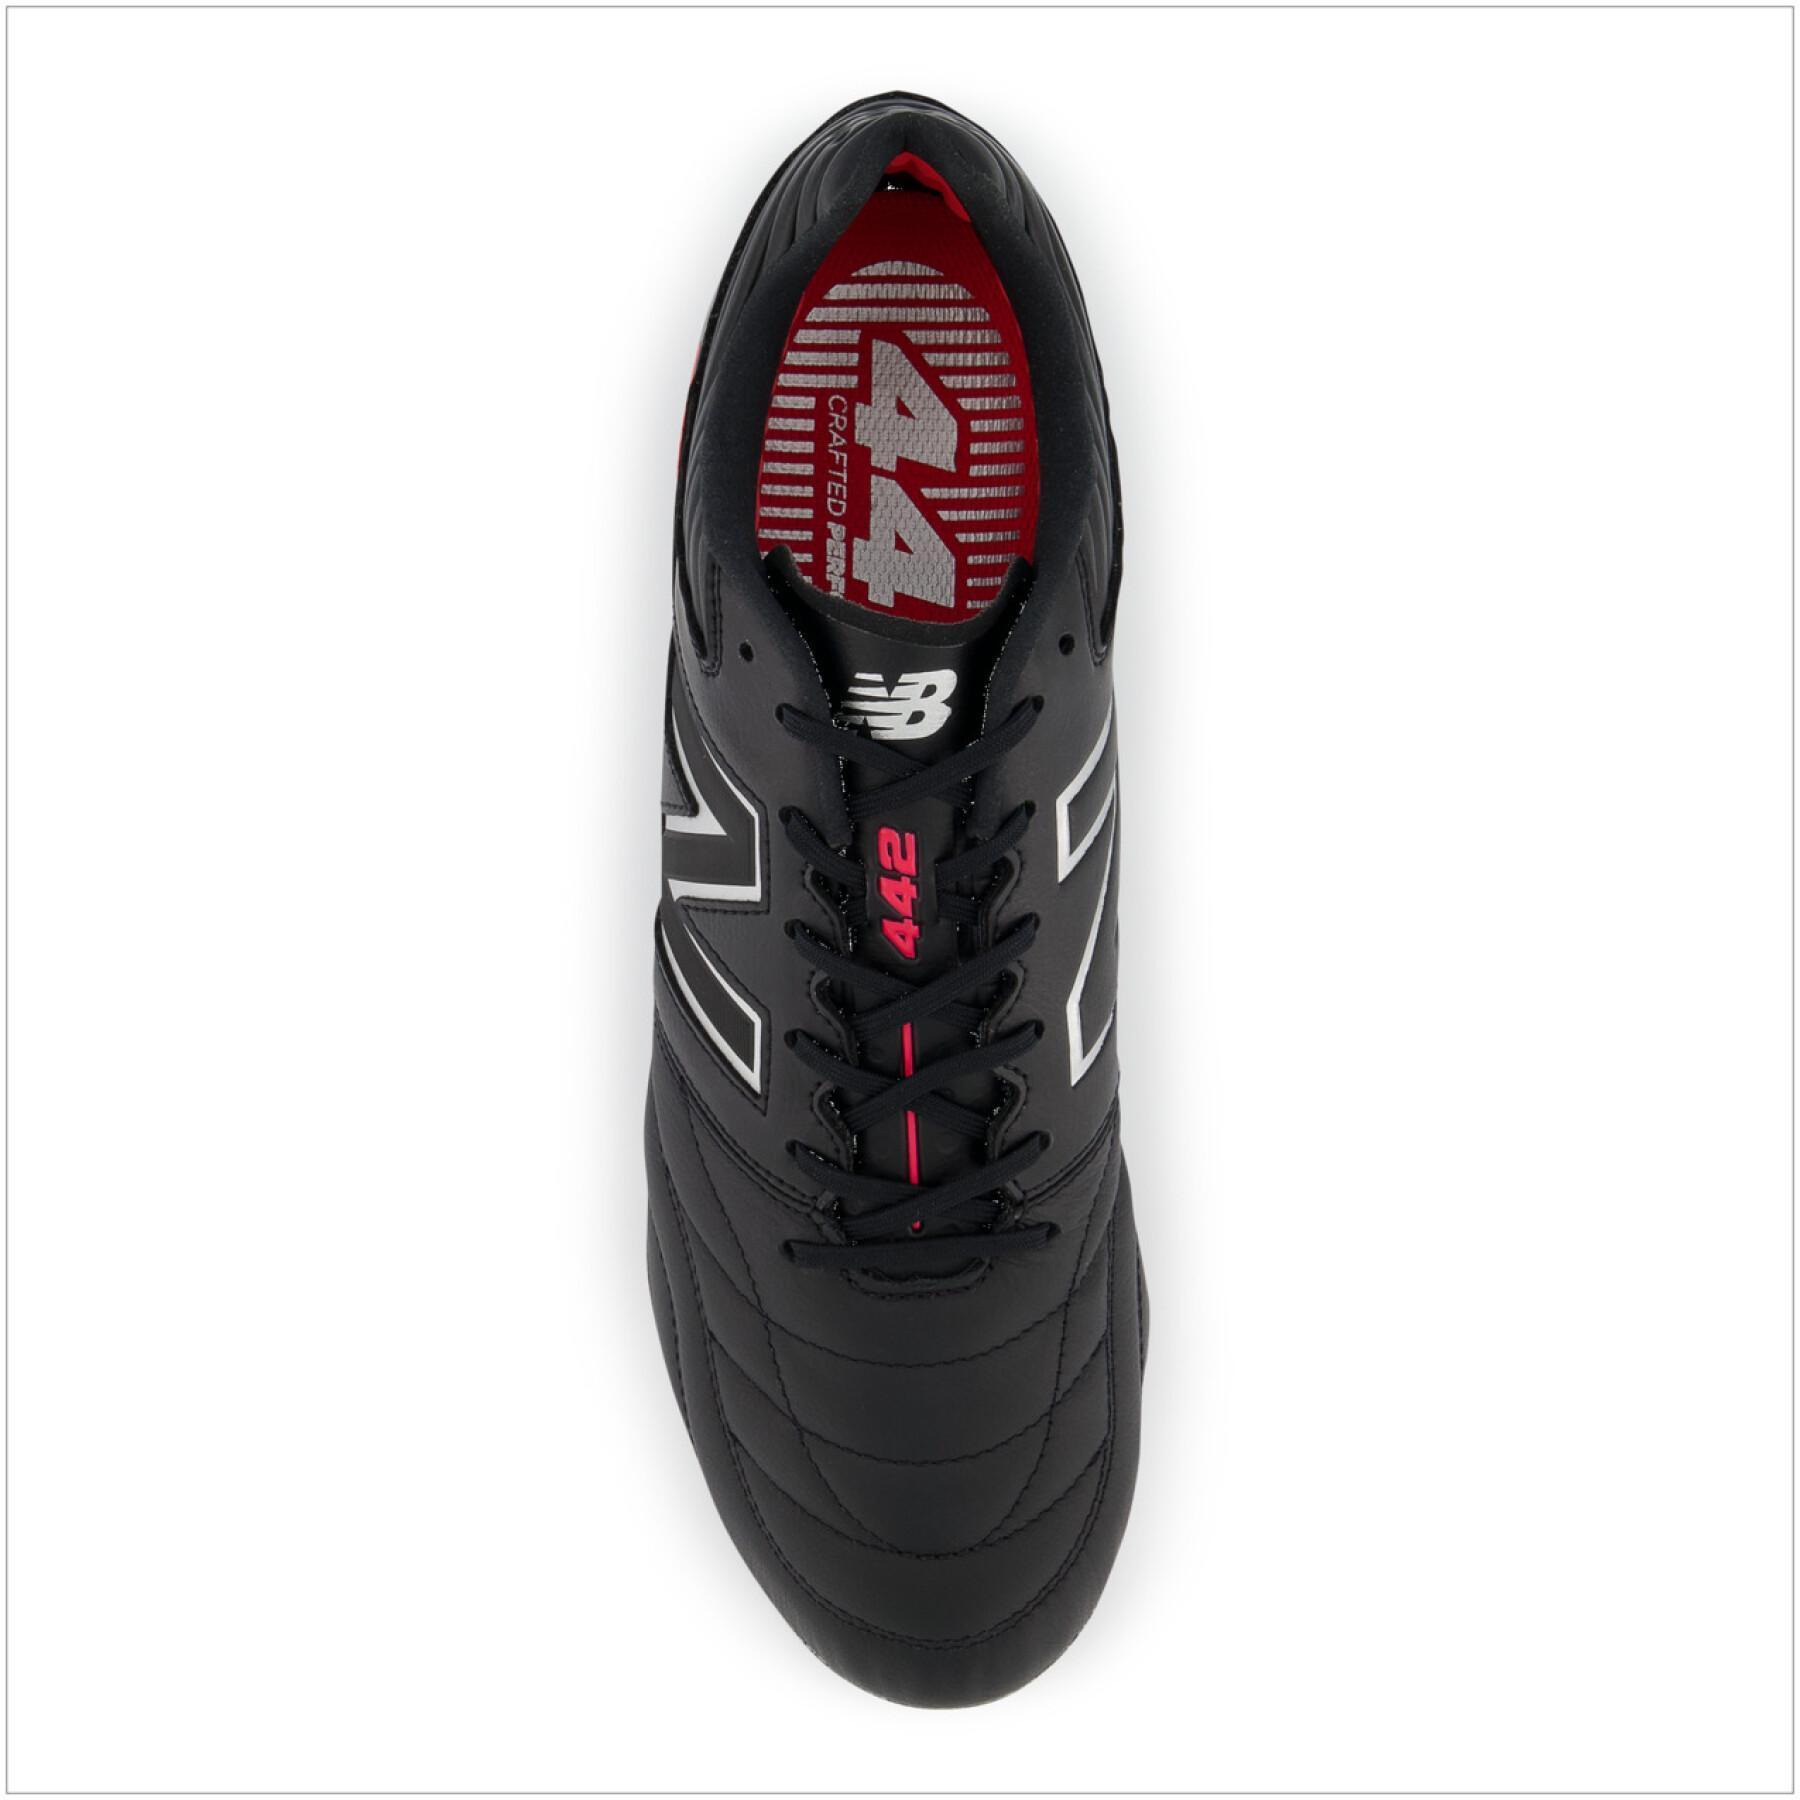 Soccer shoes New Balance 442 V2 Pro FG